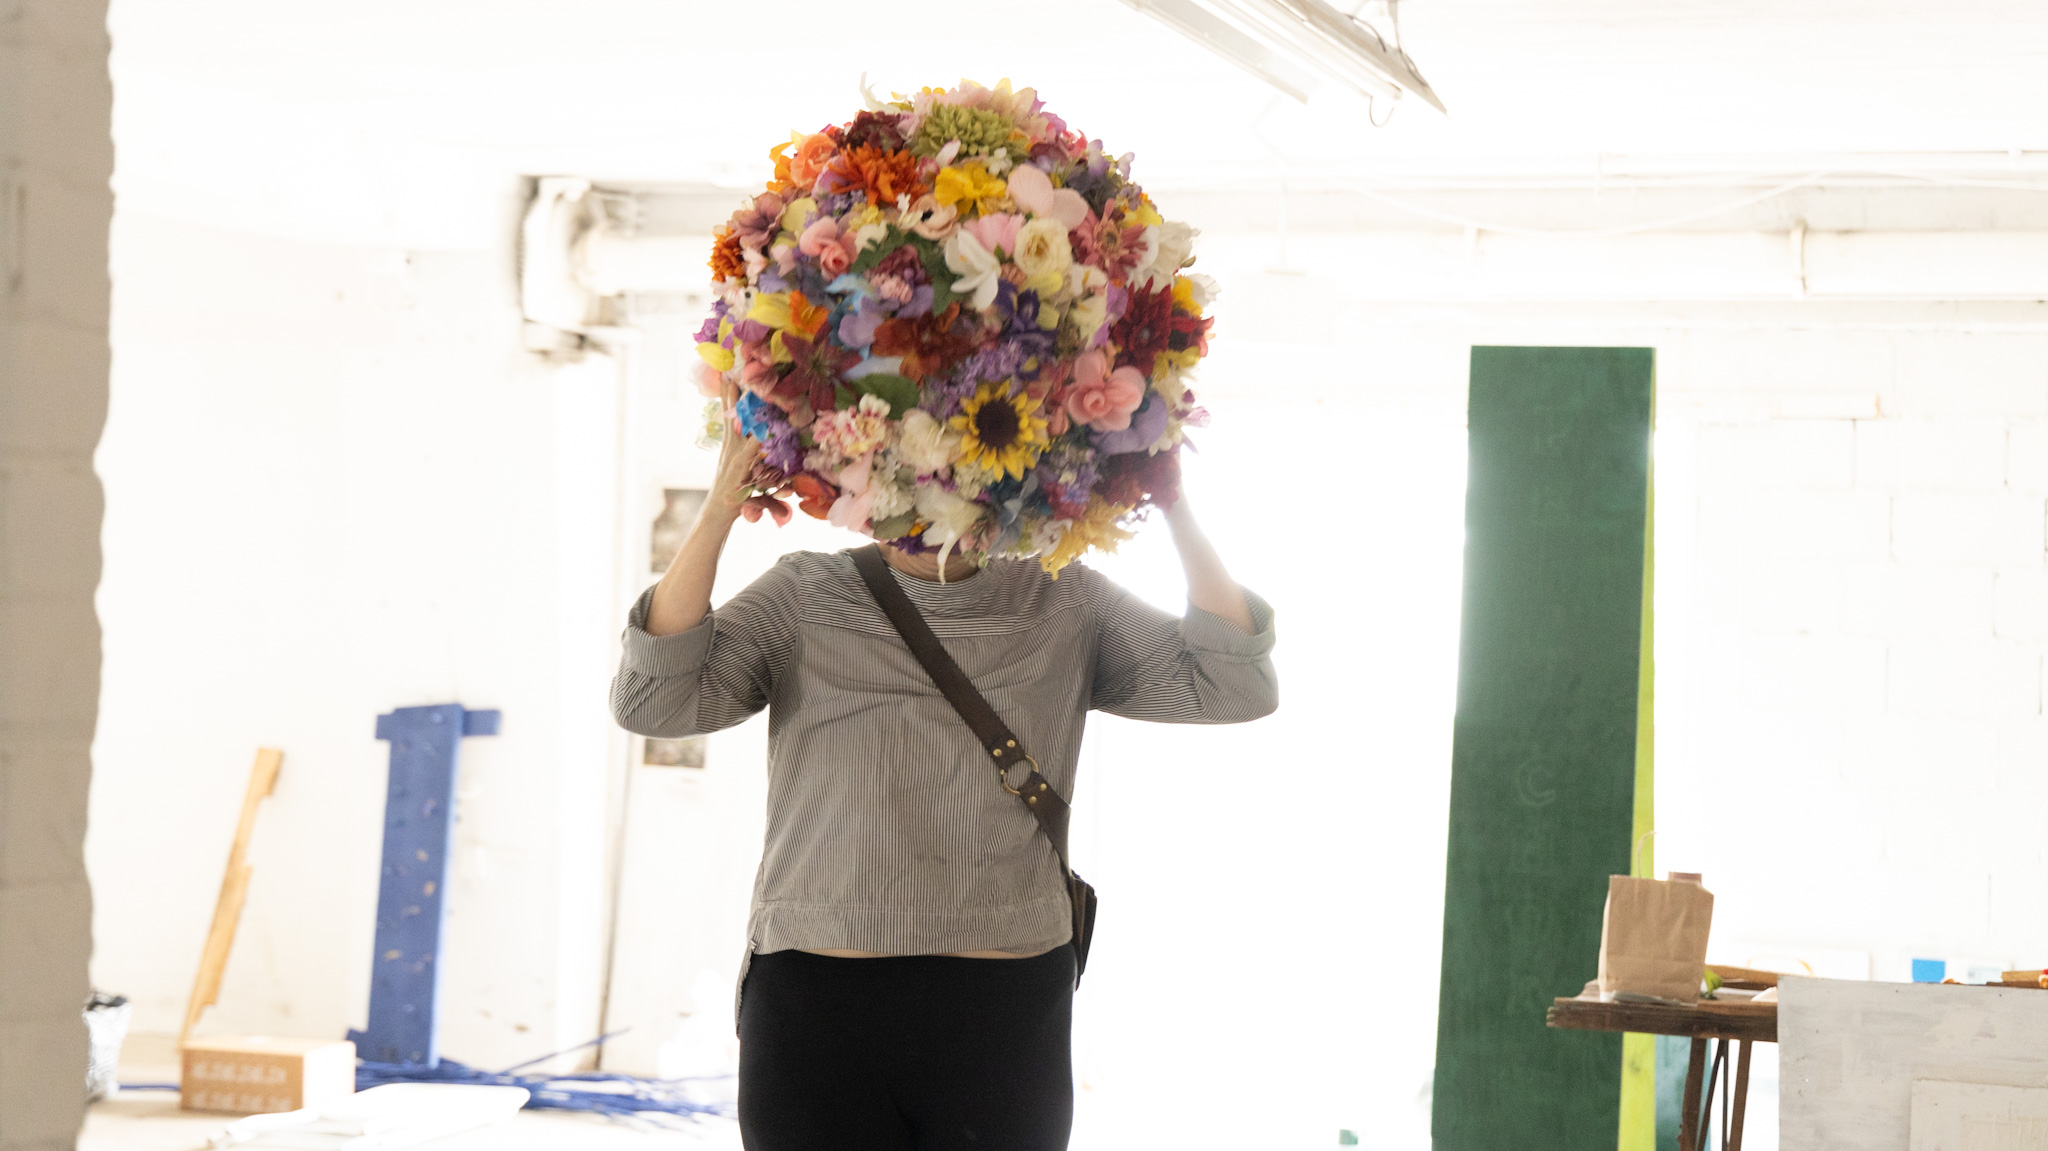 Lisa Waud wearing a flower headdress she created.